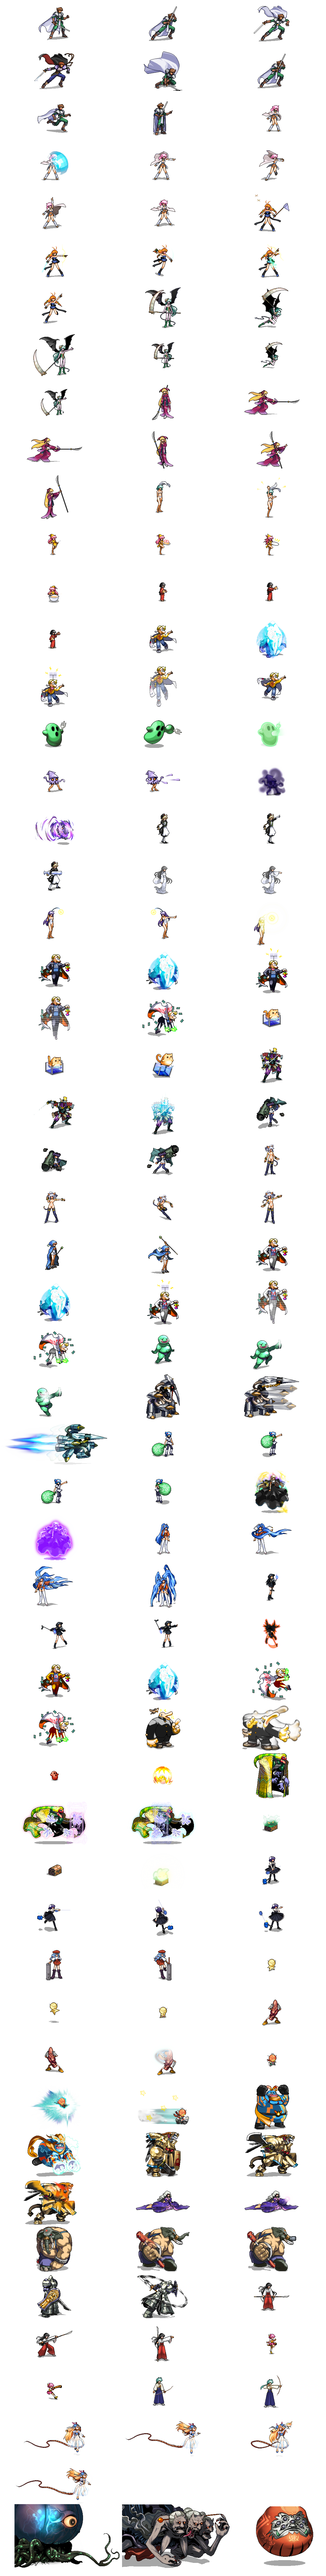 Rance 5D - Battle Characters